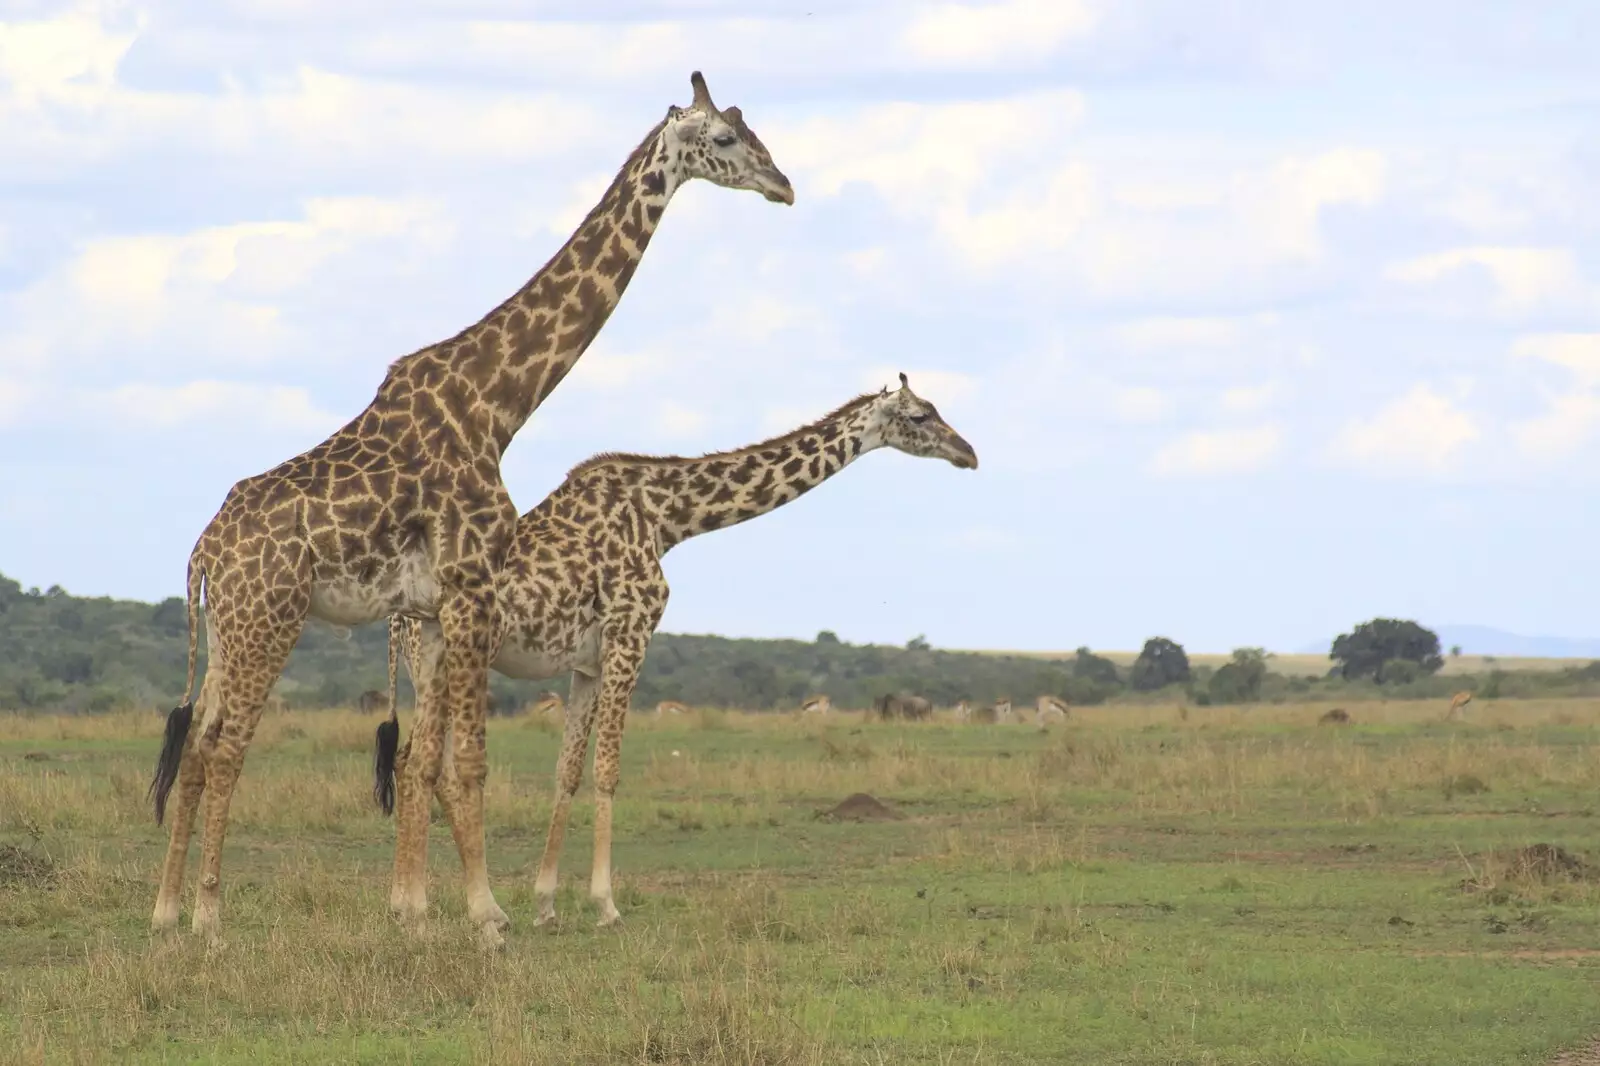 A pair of giraffe, from Maasai Mara Safari and a Maasai Village, Ololaimutia, Kenya - 5th November 2010